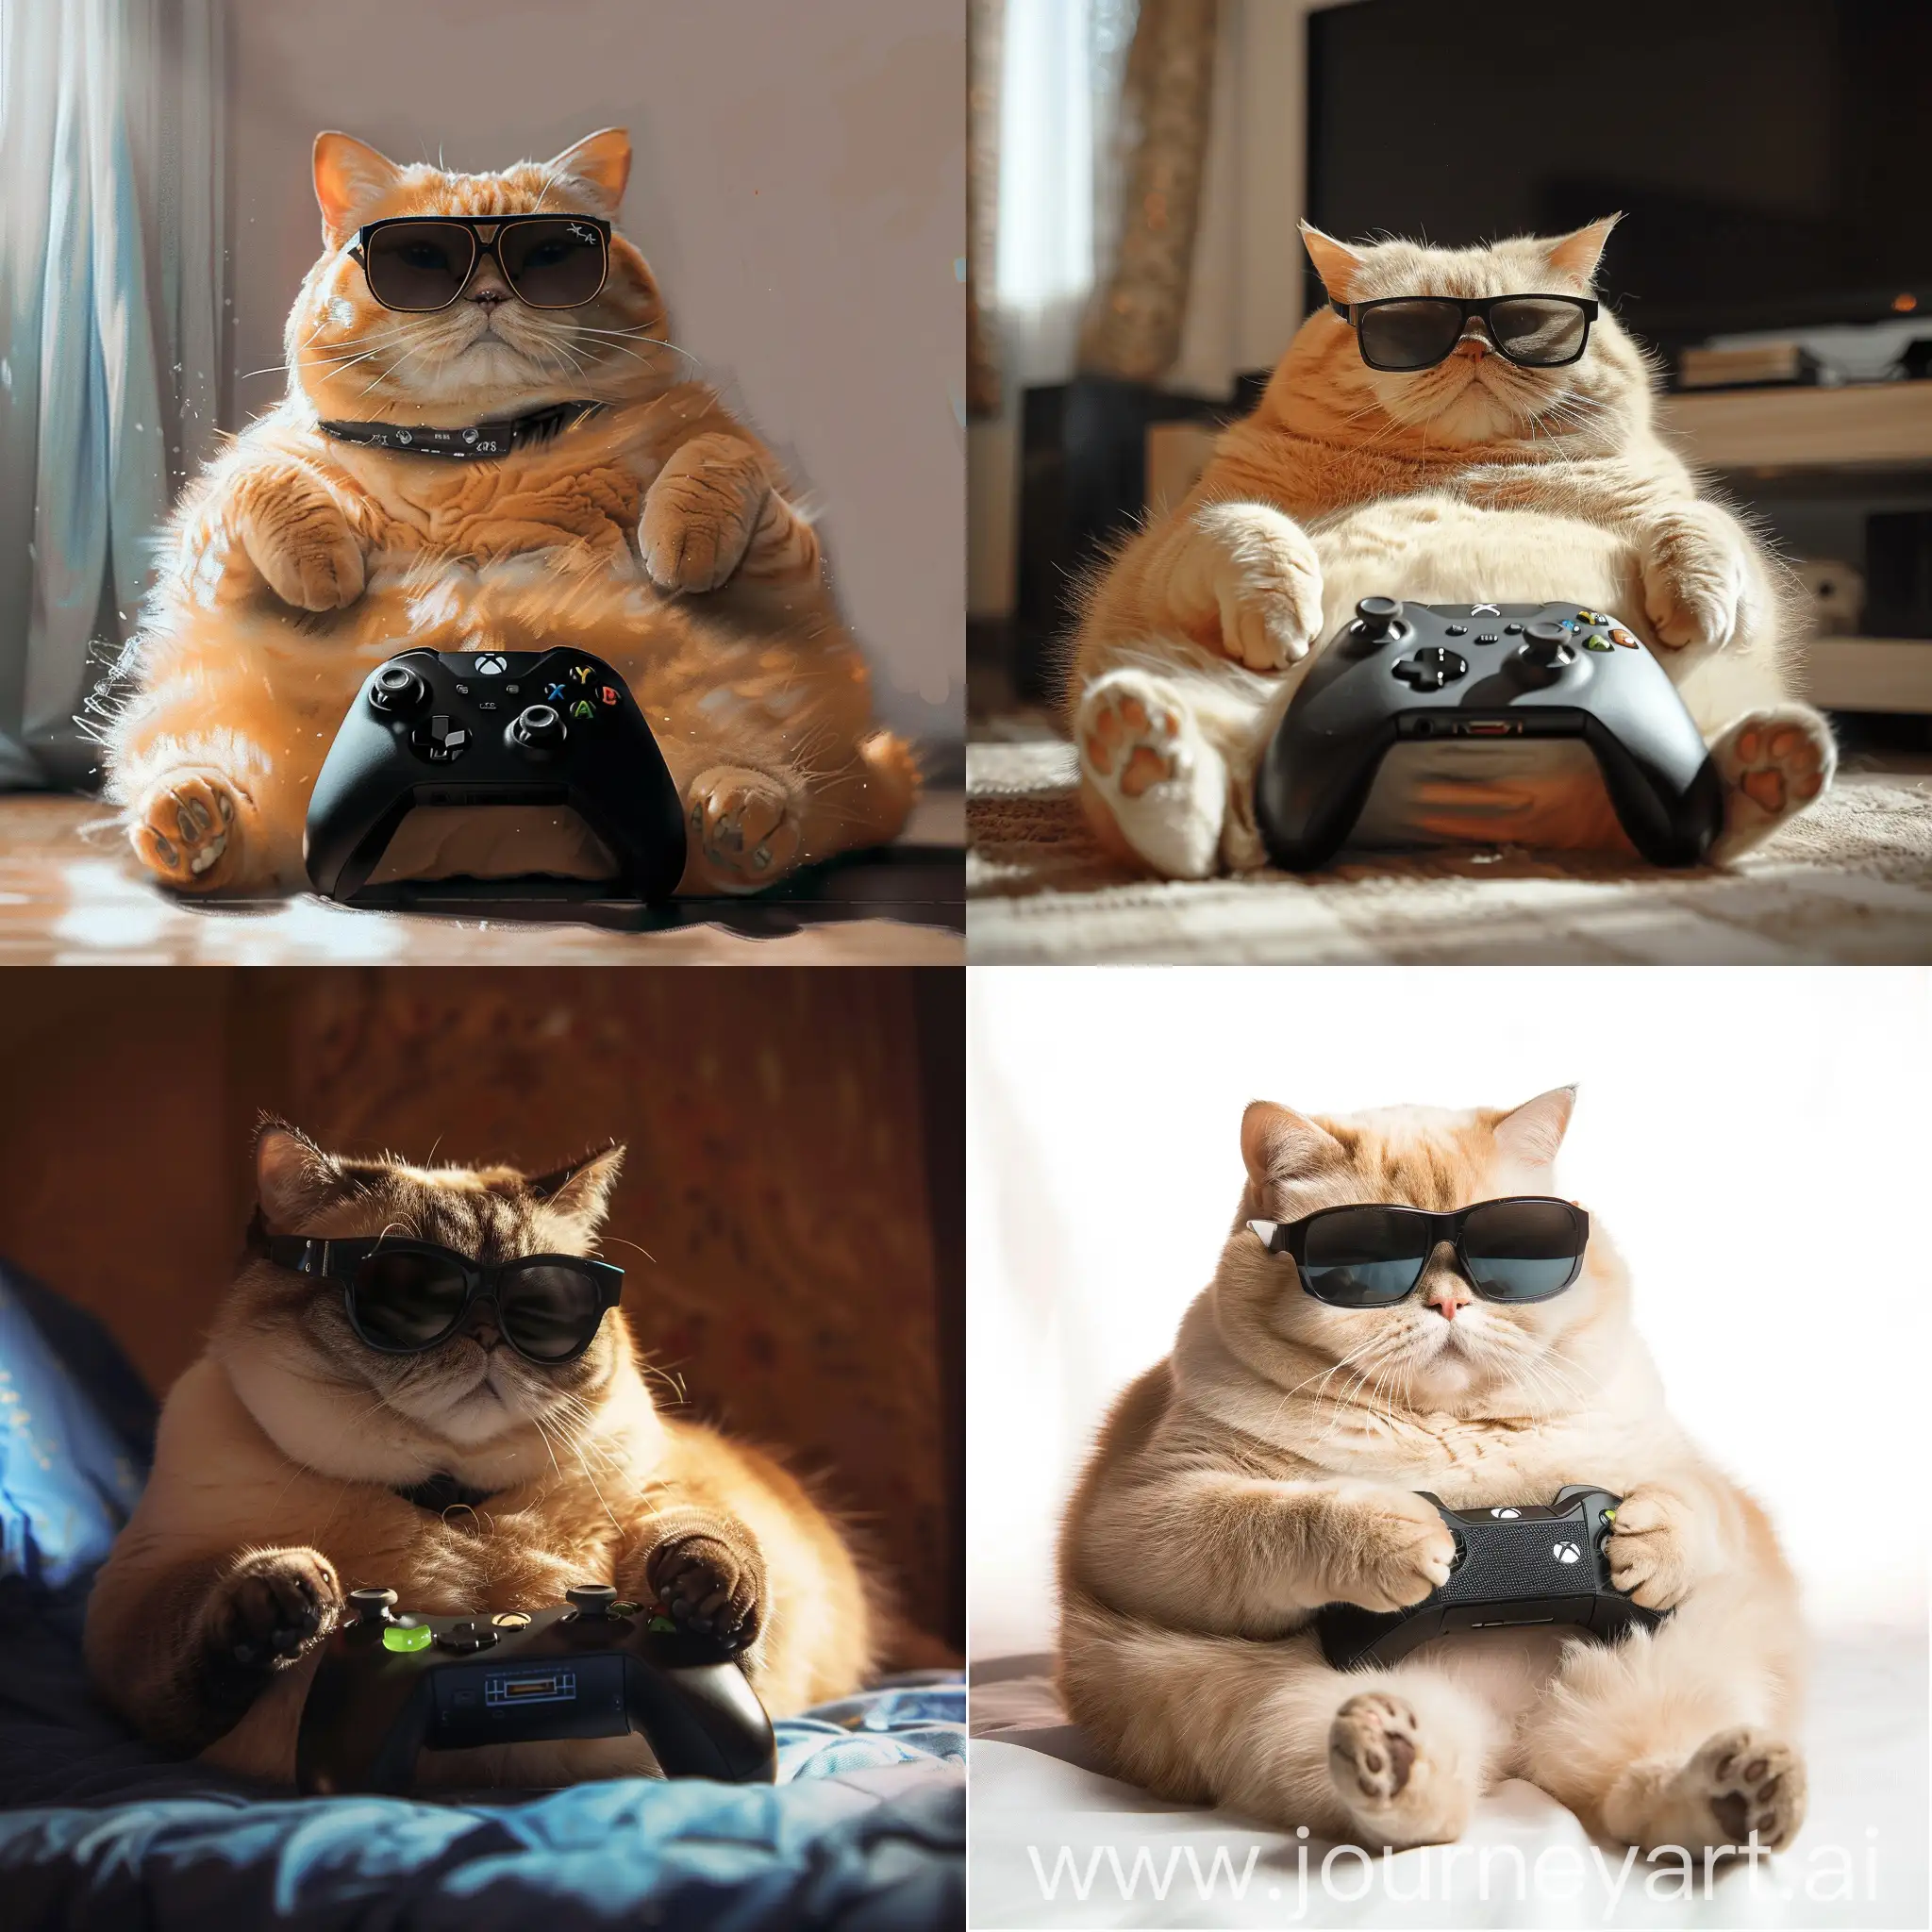 Fat cat wearing sunglasses playing an xbox